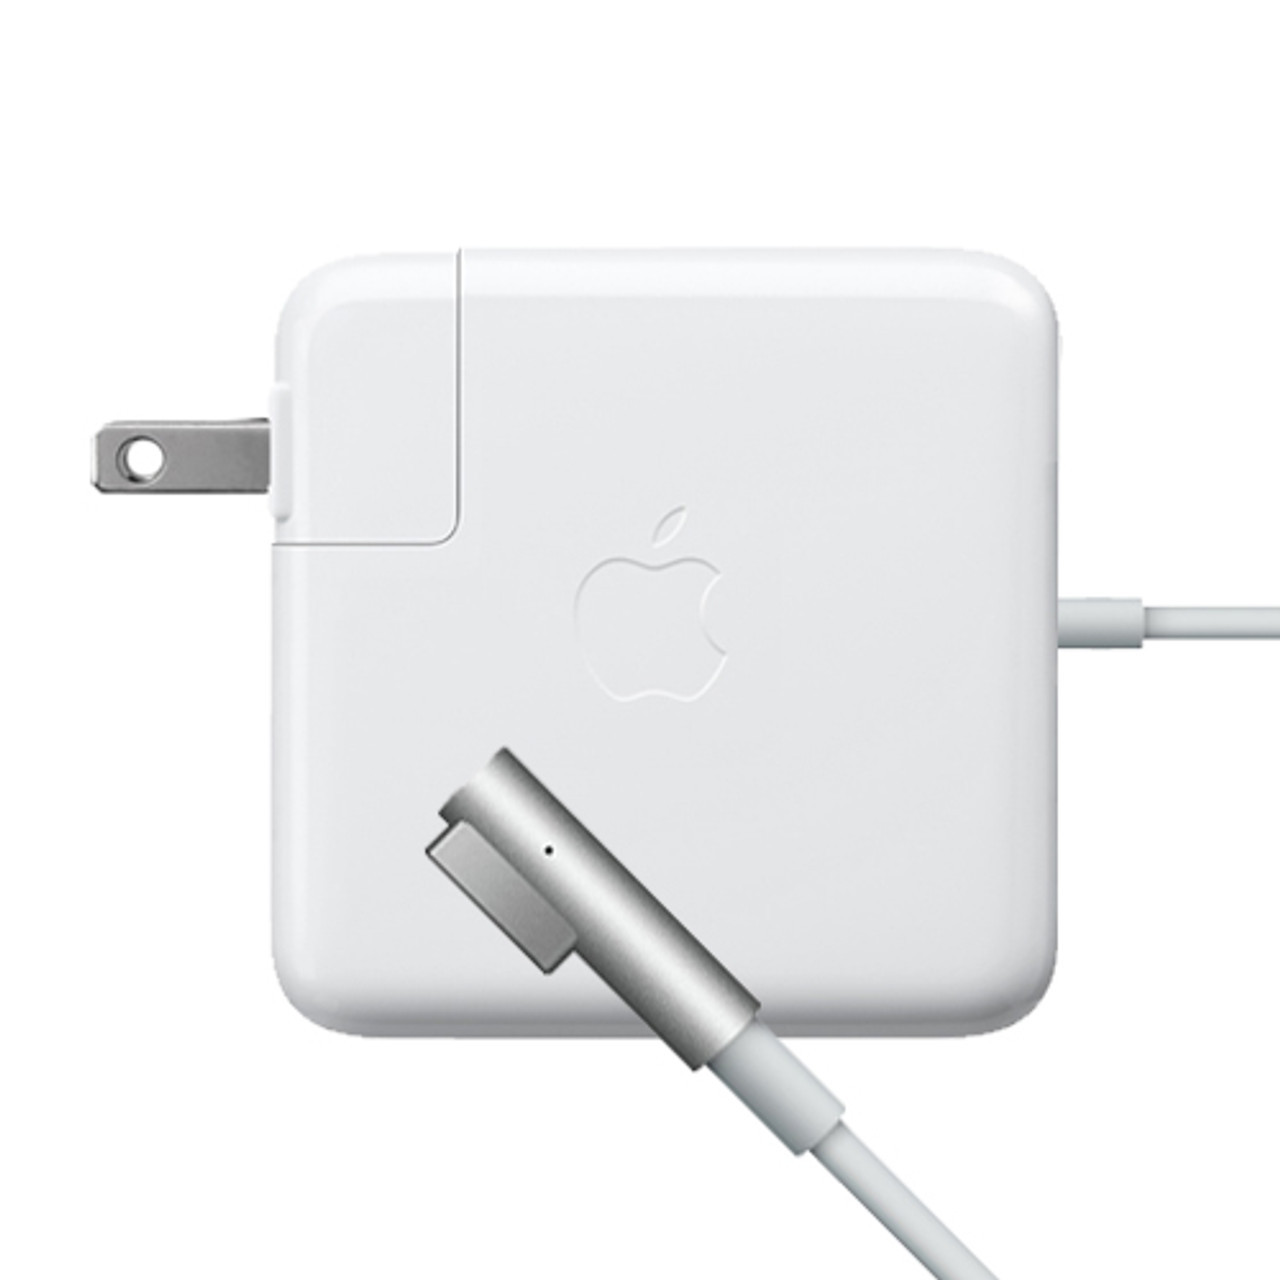 macbook pro 13 mid 2012 sata cable